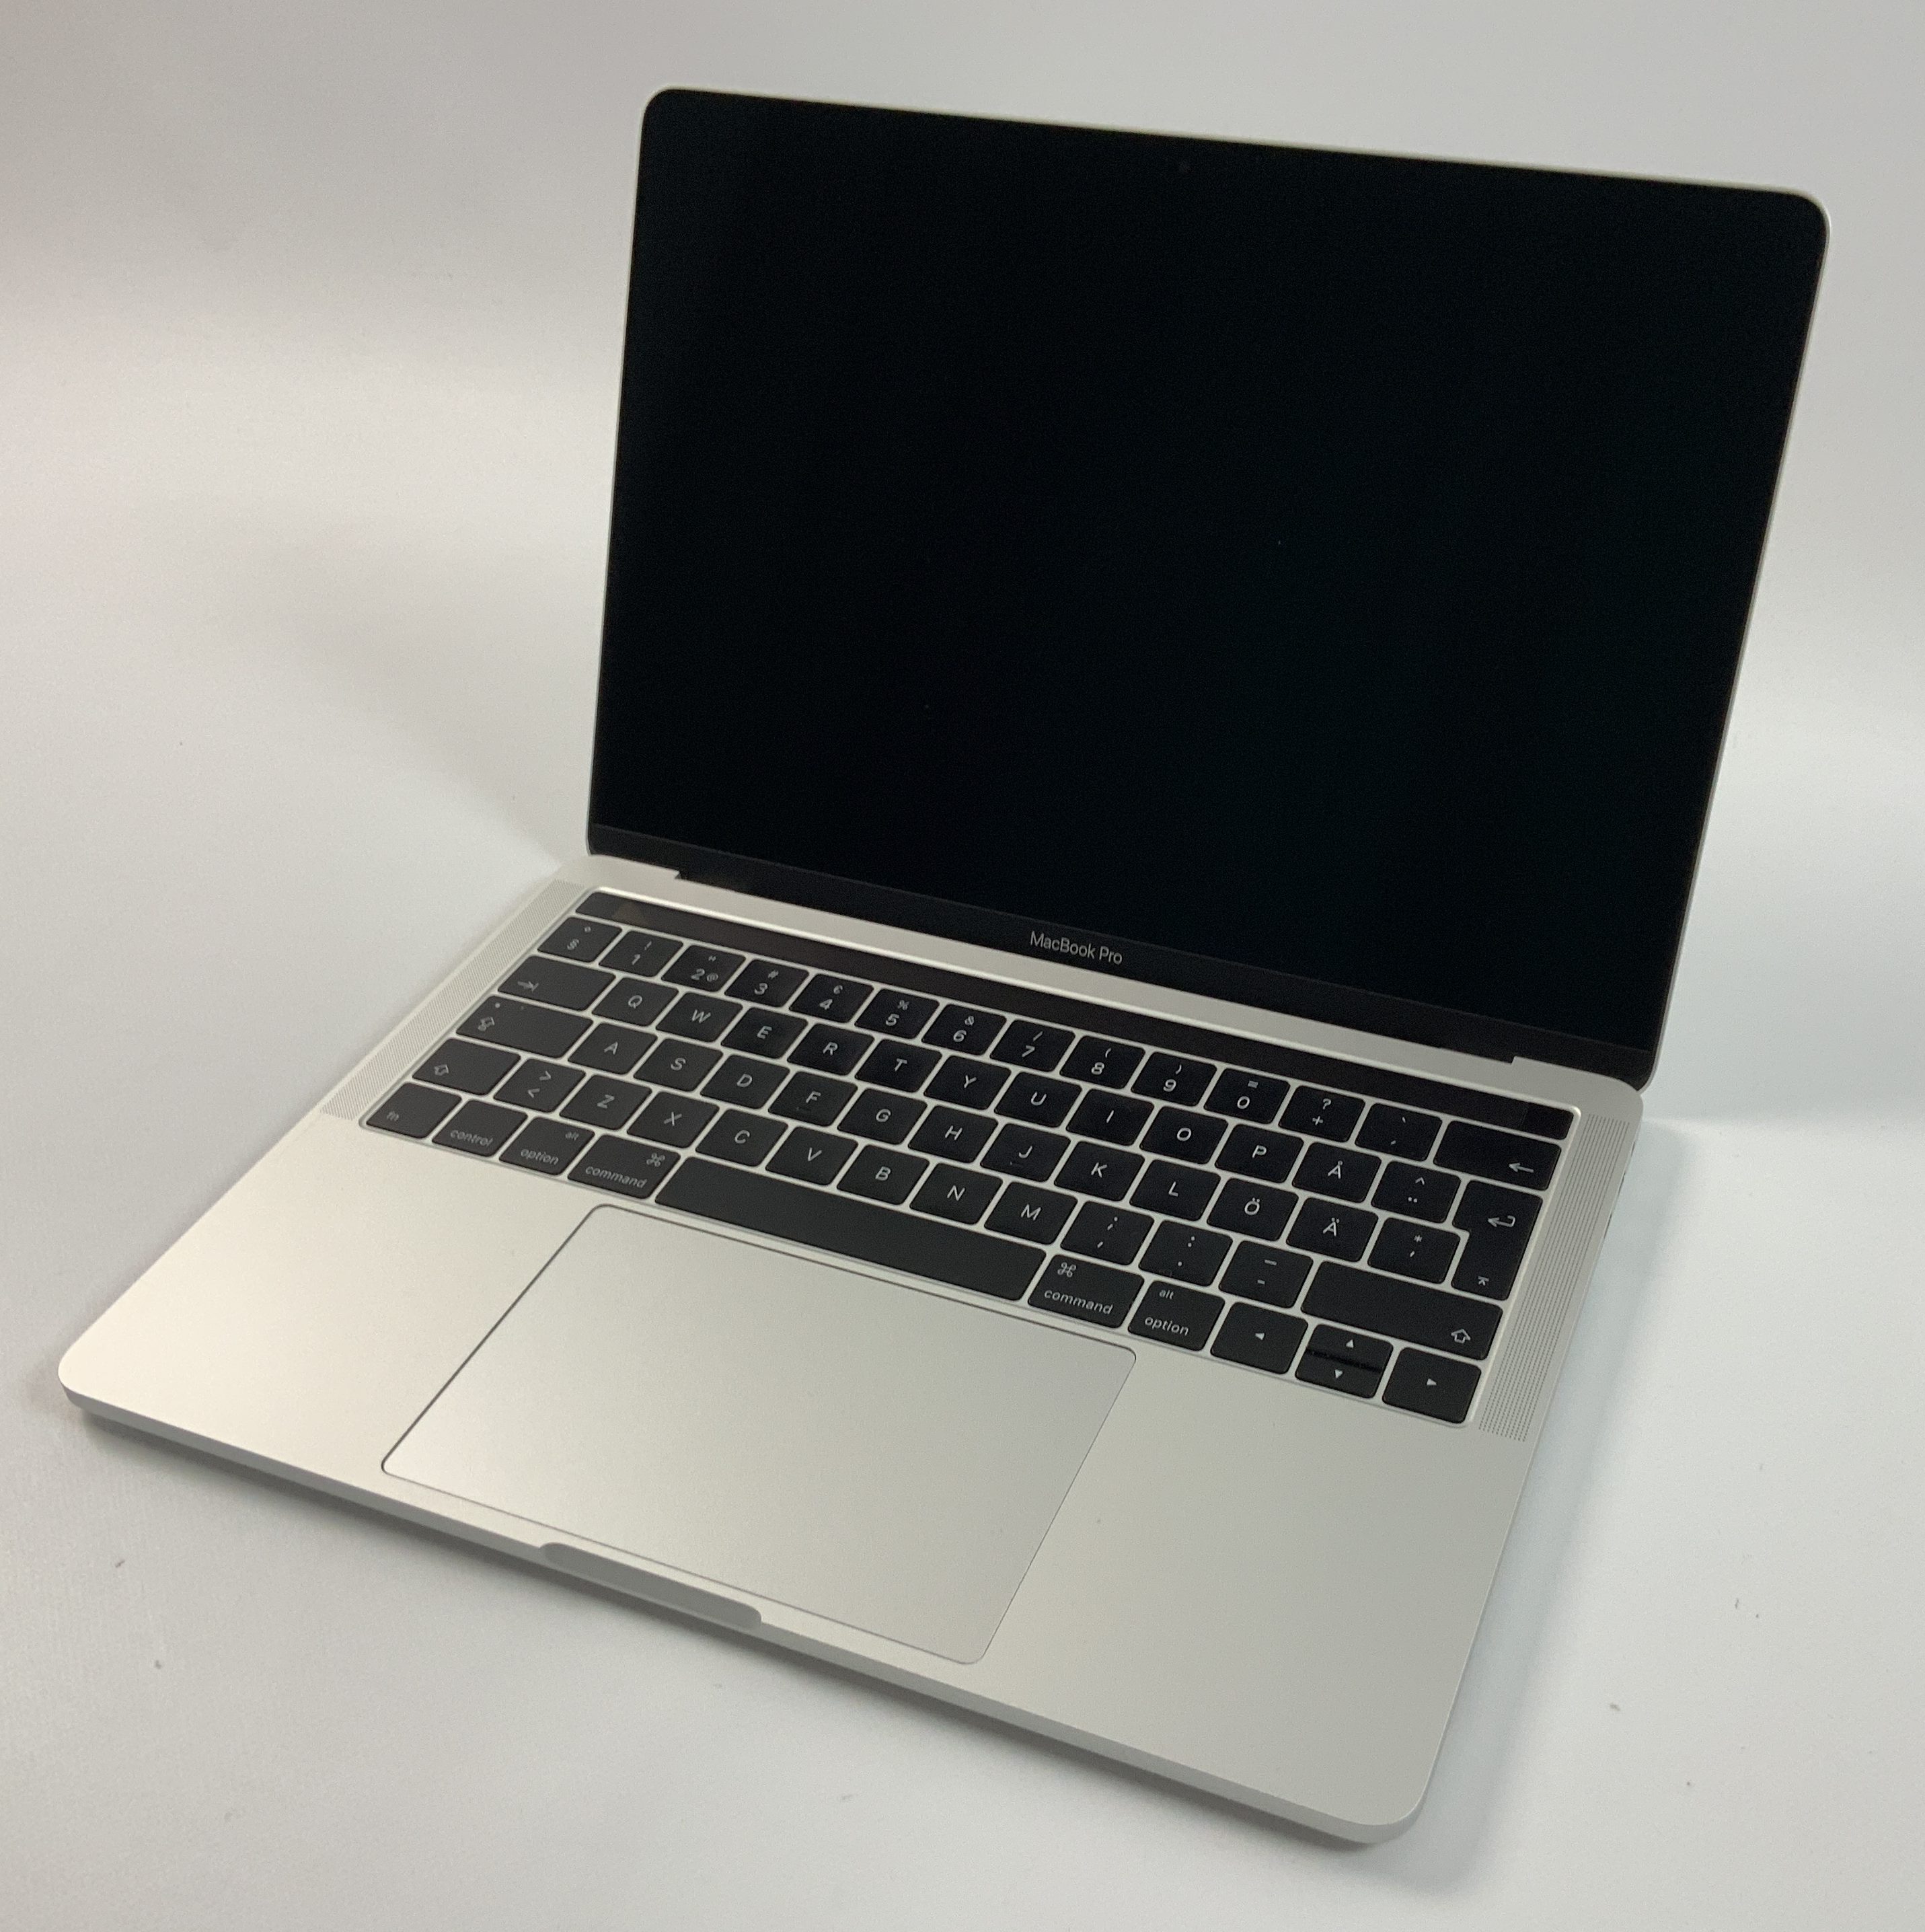 MacBook Pro 13" 4TBT Late 2016 (Intel Core i5 2.9 GHz 16 GB RAM 256 GB SSD), Silver, Intel Core i5 2.9 GHz, 16 GB RAM, 256 GB SSD, immagine 1